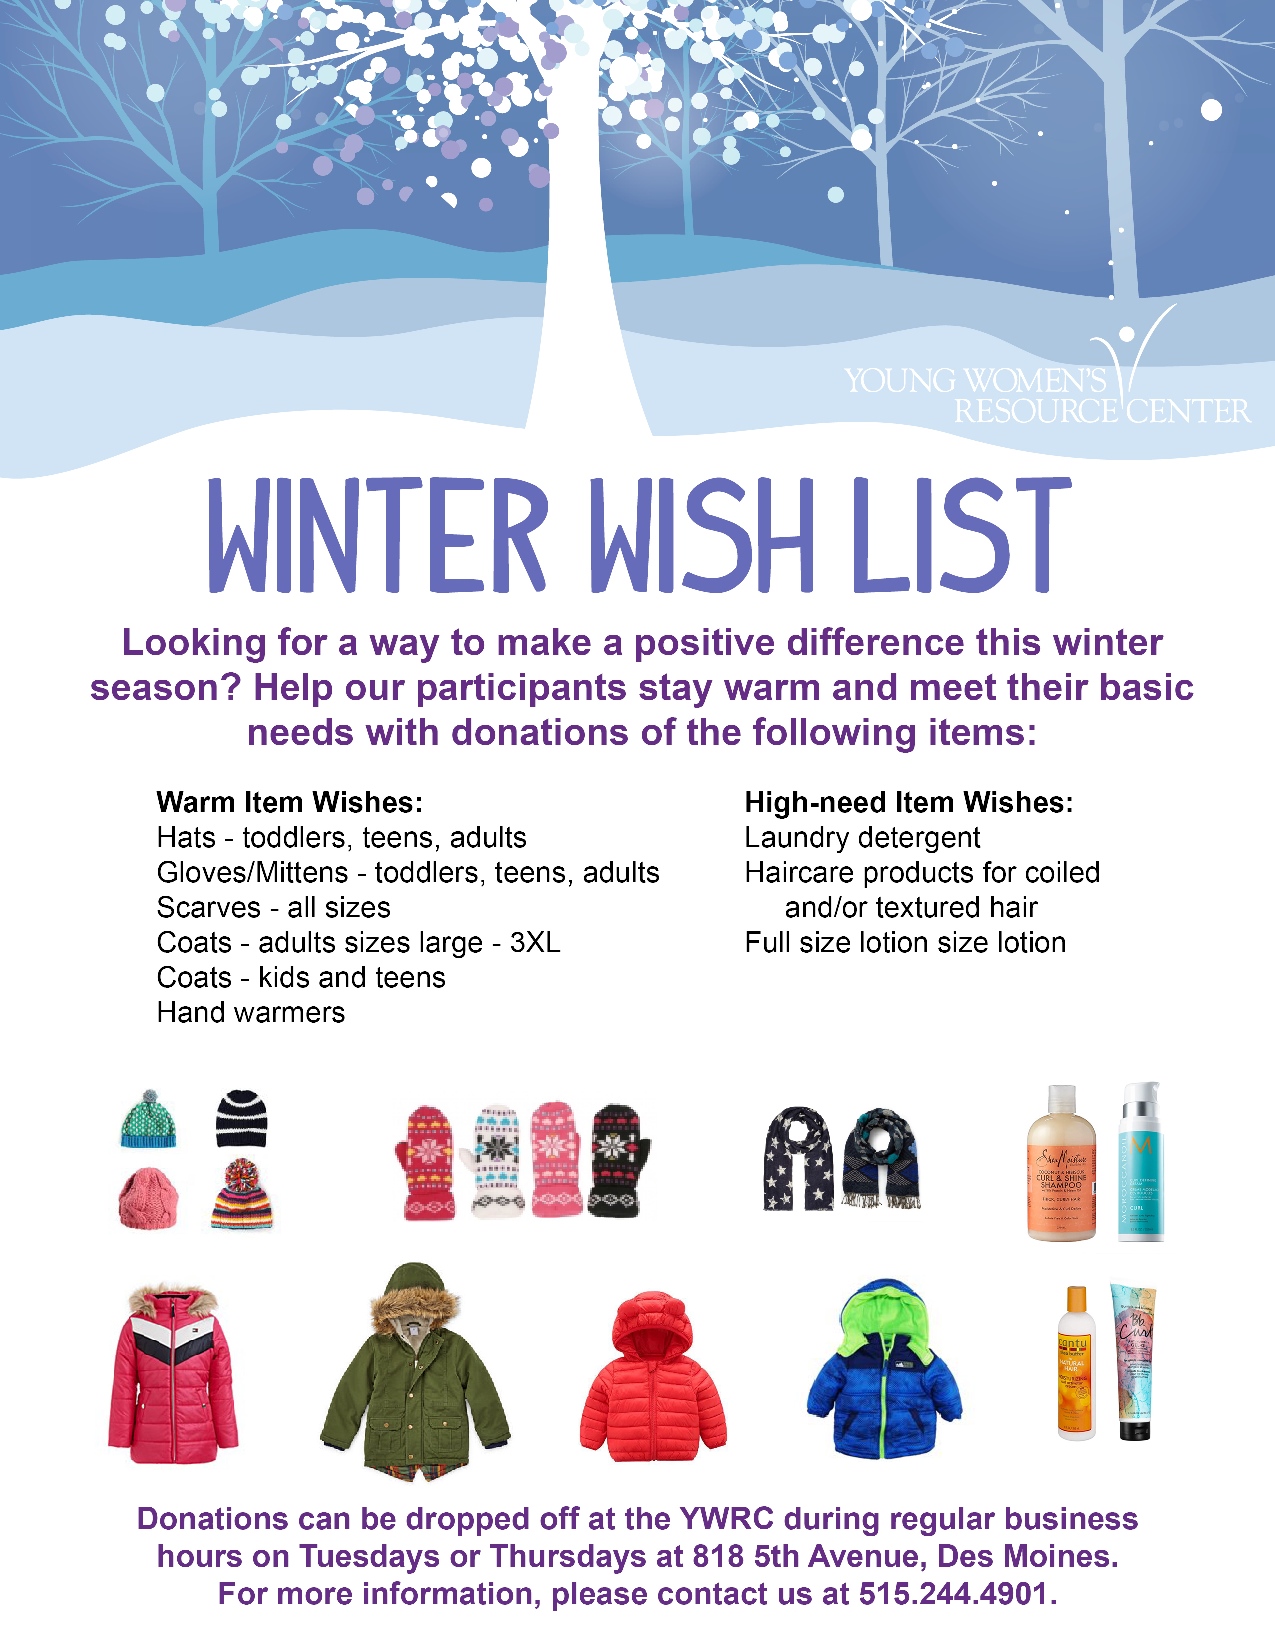 Winter Wish List 2019 - Young Women's Resource Center